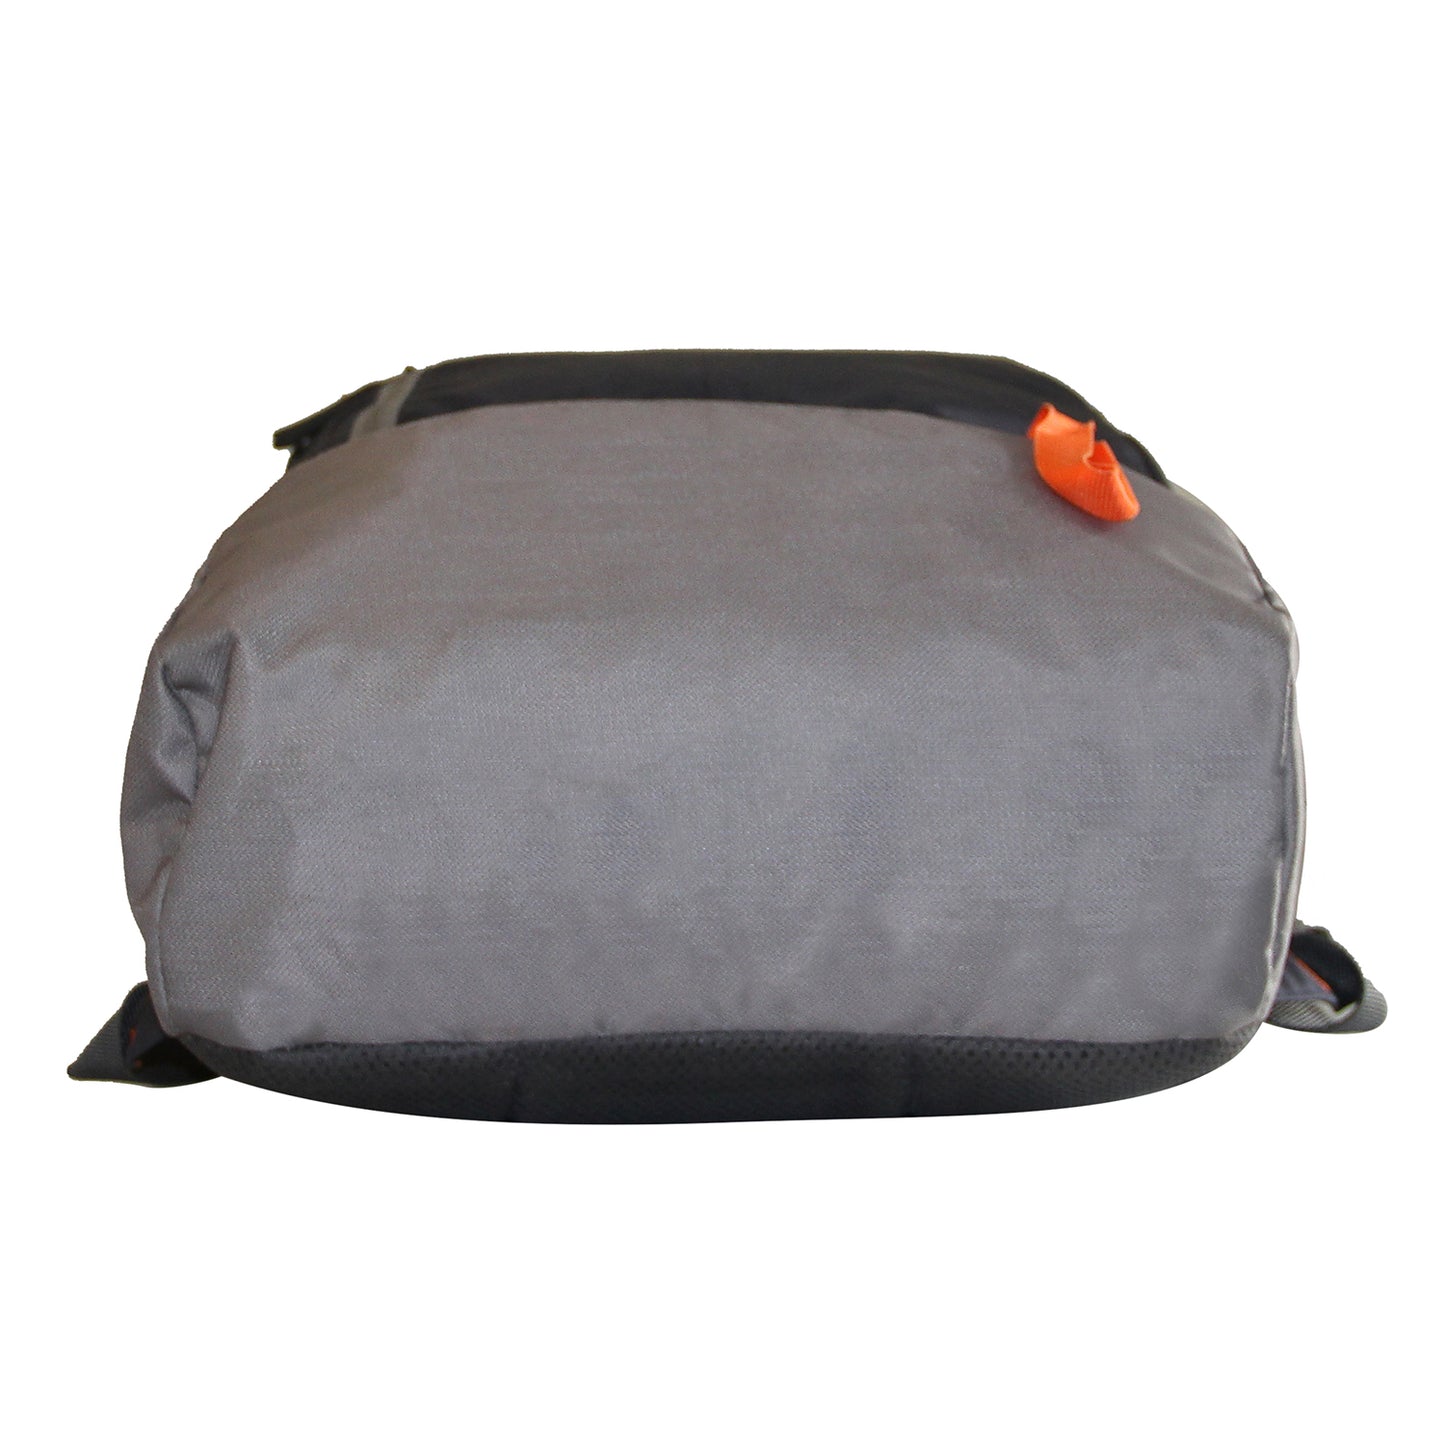 Navy & Grey Basic Backpack